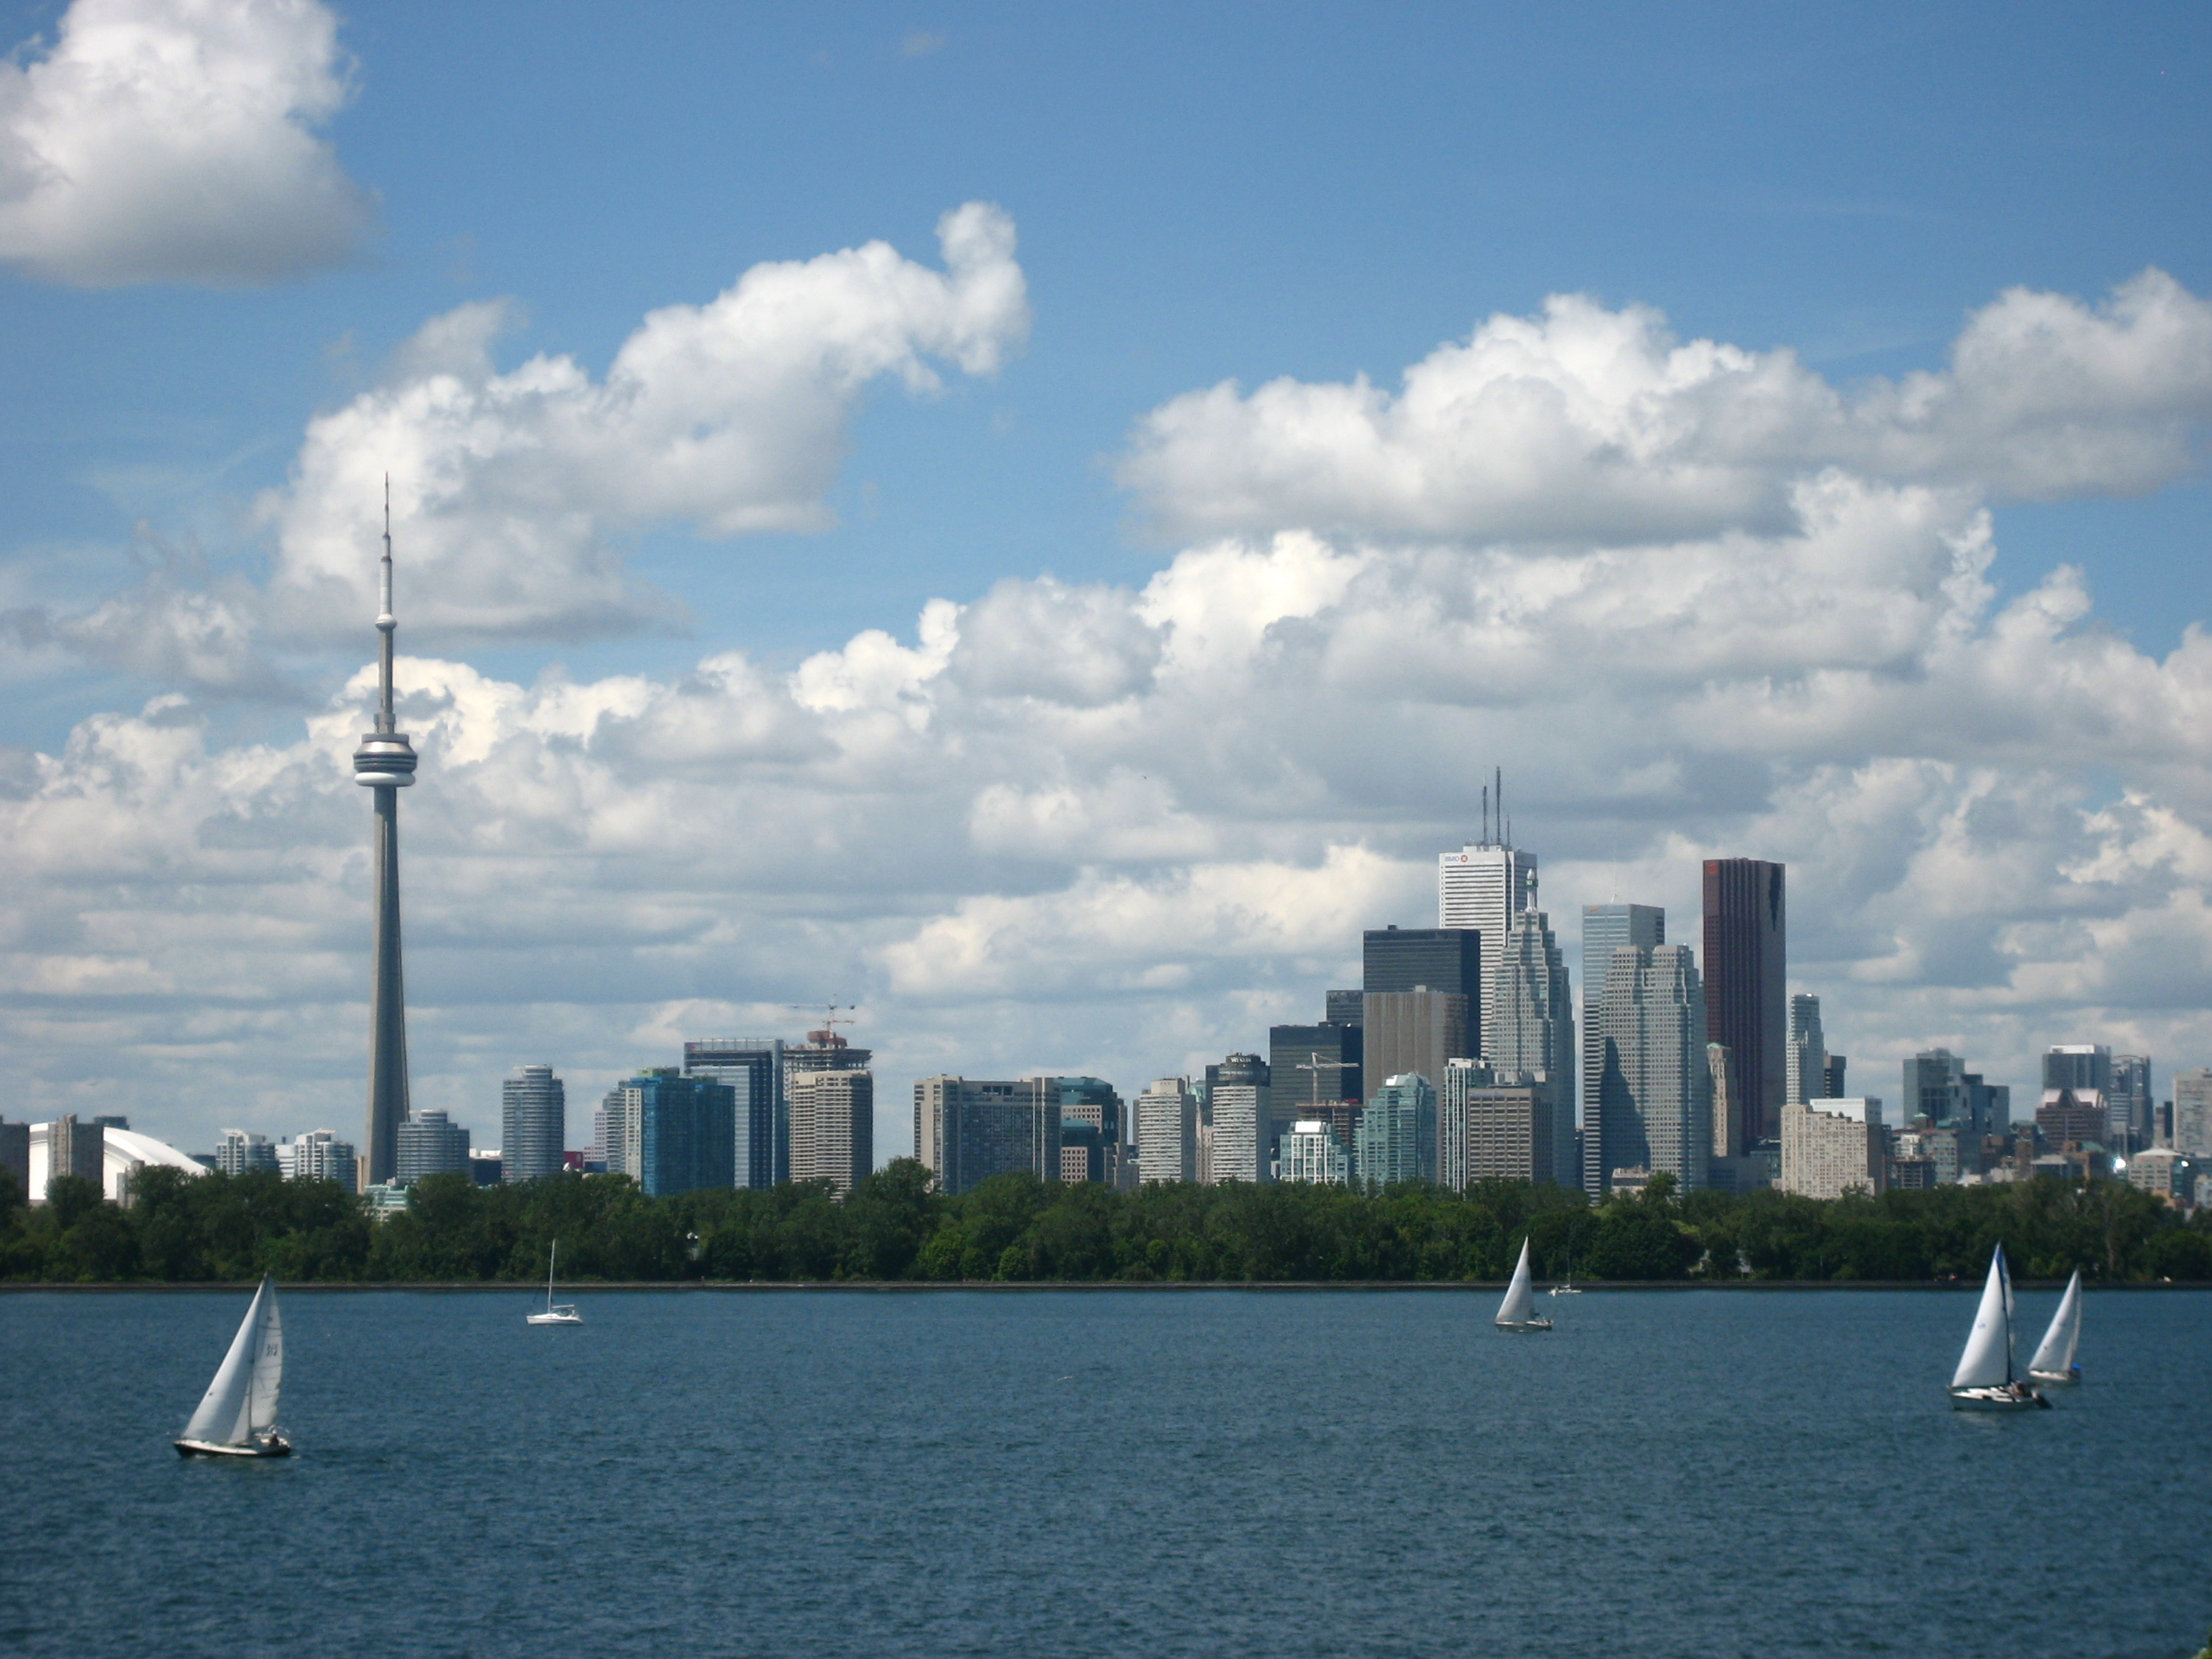 Toronto skyline and waterfront